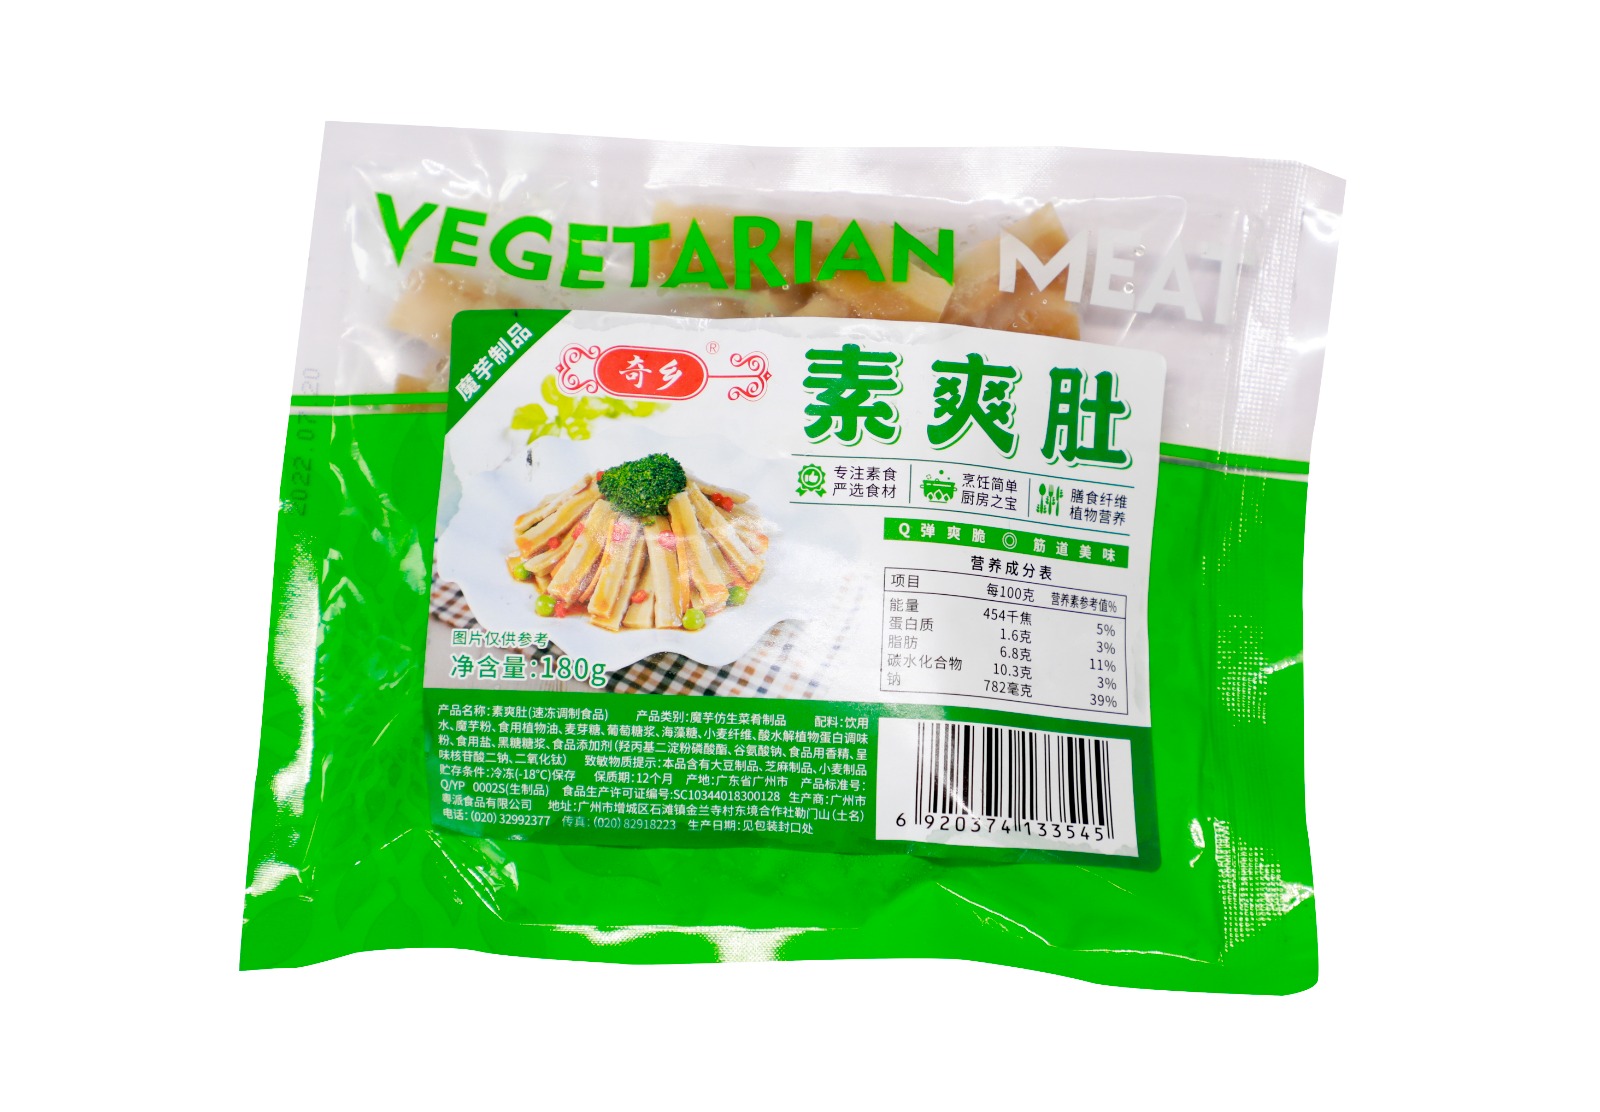 Image <a title="Qi Xiang Vegetarian Pork Tripe 素肚爽 素朱肚 180 grams" href="https://friendlyvegetarian.com.sg/product/1901/qi-xiang-vegetarian-pork-tripe-180-grams">Qi Xiang Vegetarian Pork Tripe 素肚爽 素朱肚 180 grams</a>